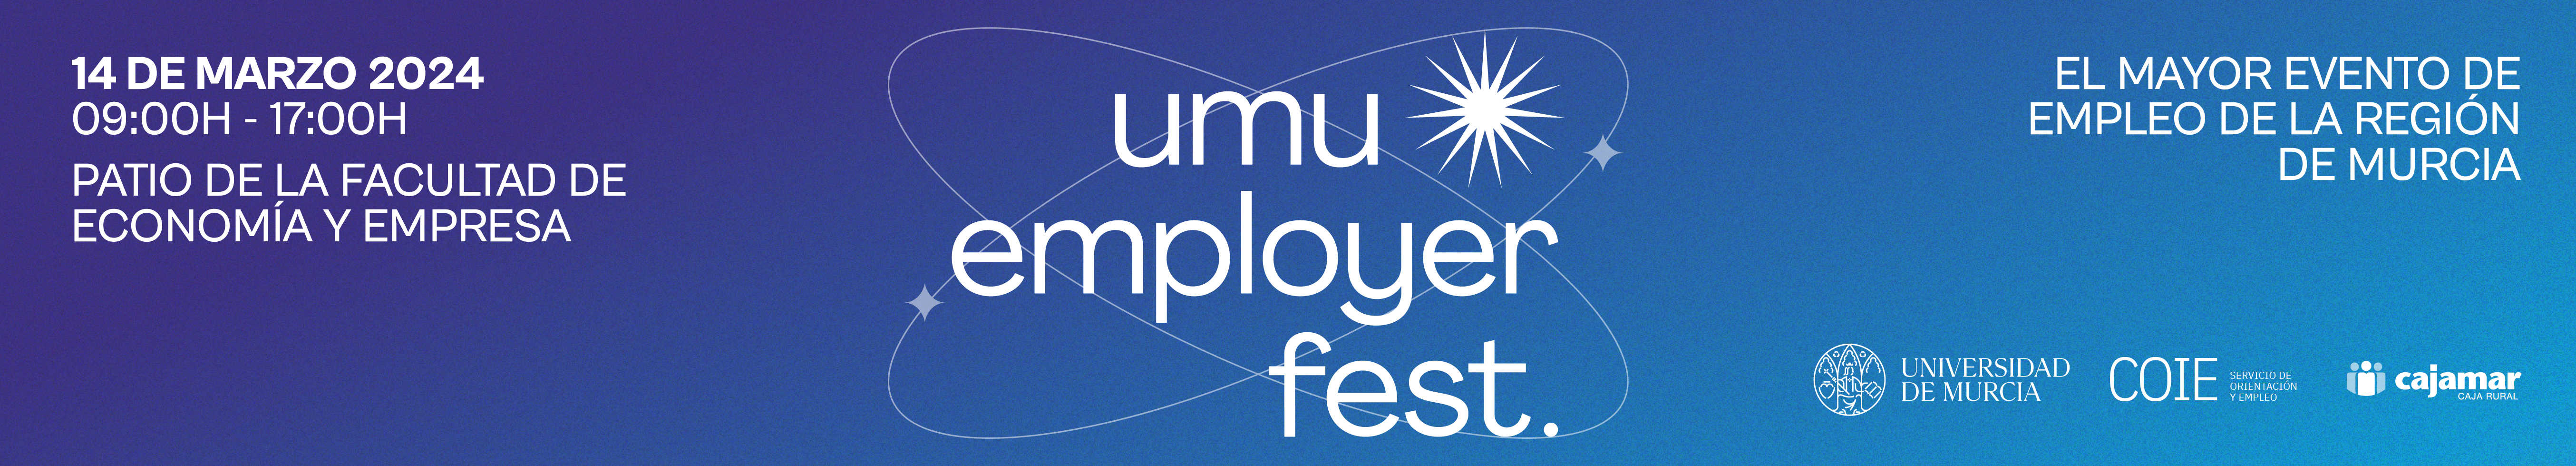 Banner UMU Employer Fest 2024